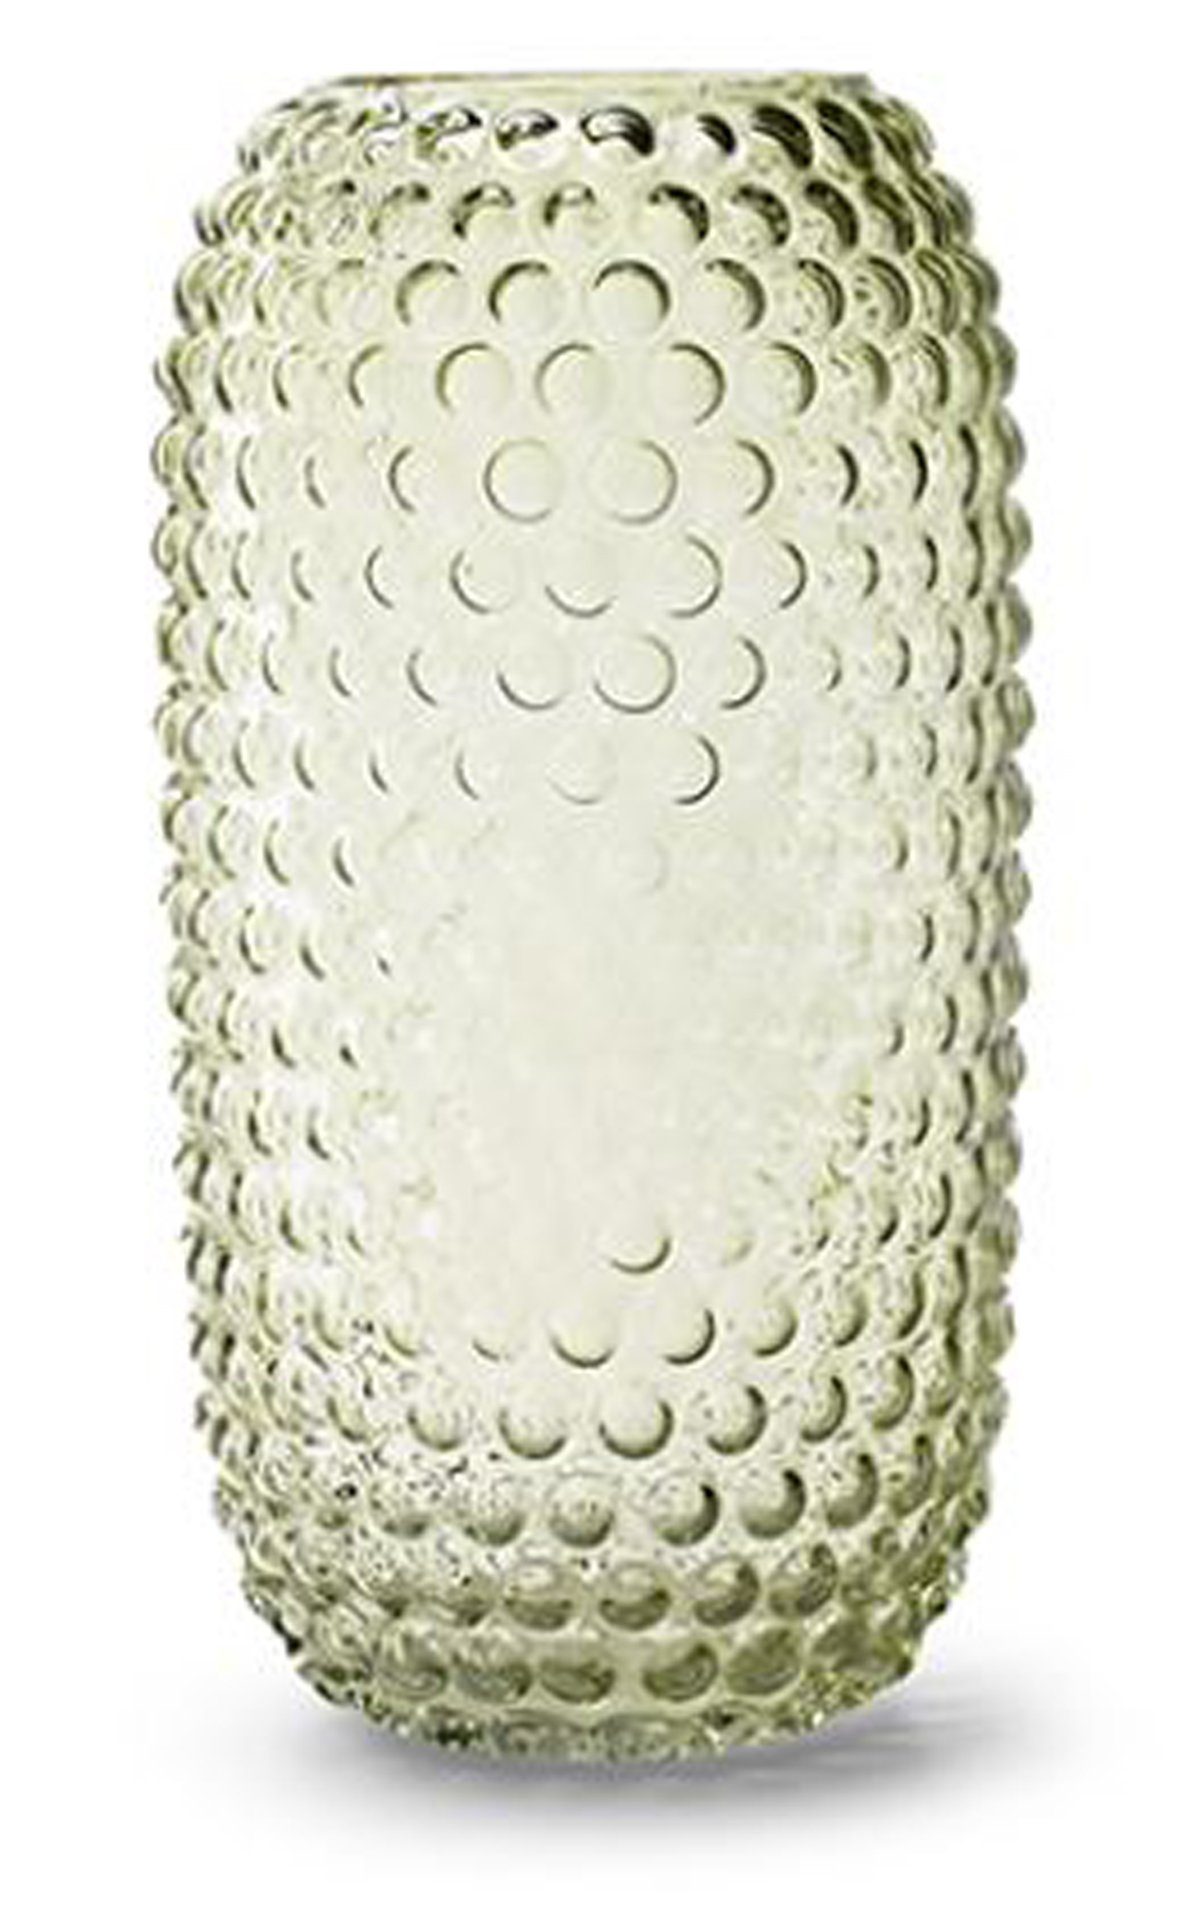 H30 hell (1 St) Tischvase Glas Vase cm Annimuck grün Zylindervase D16 hoch Bobble